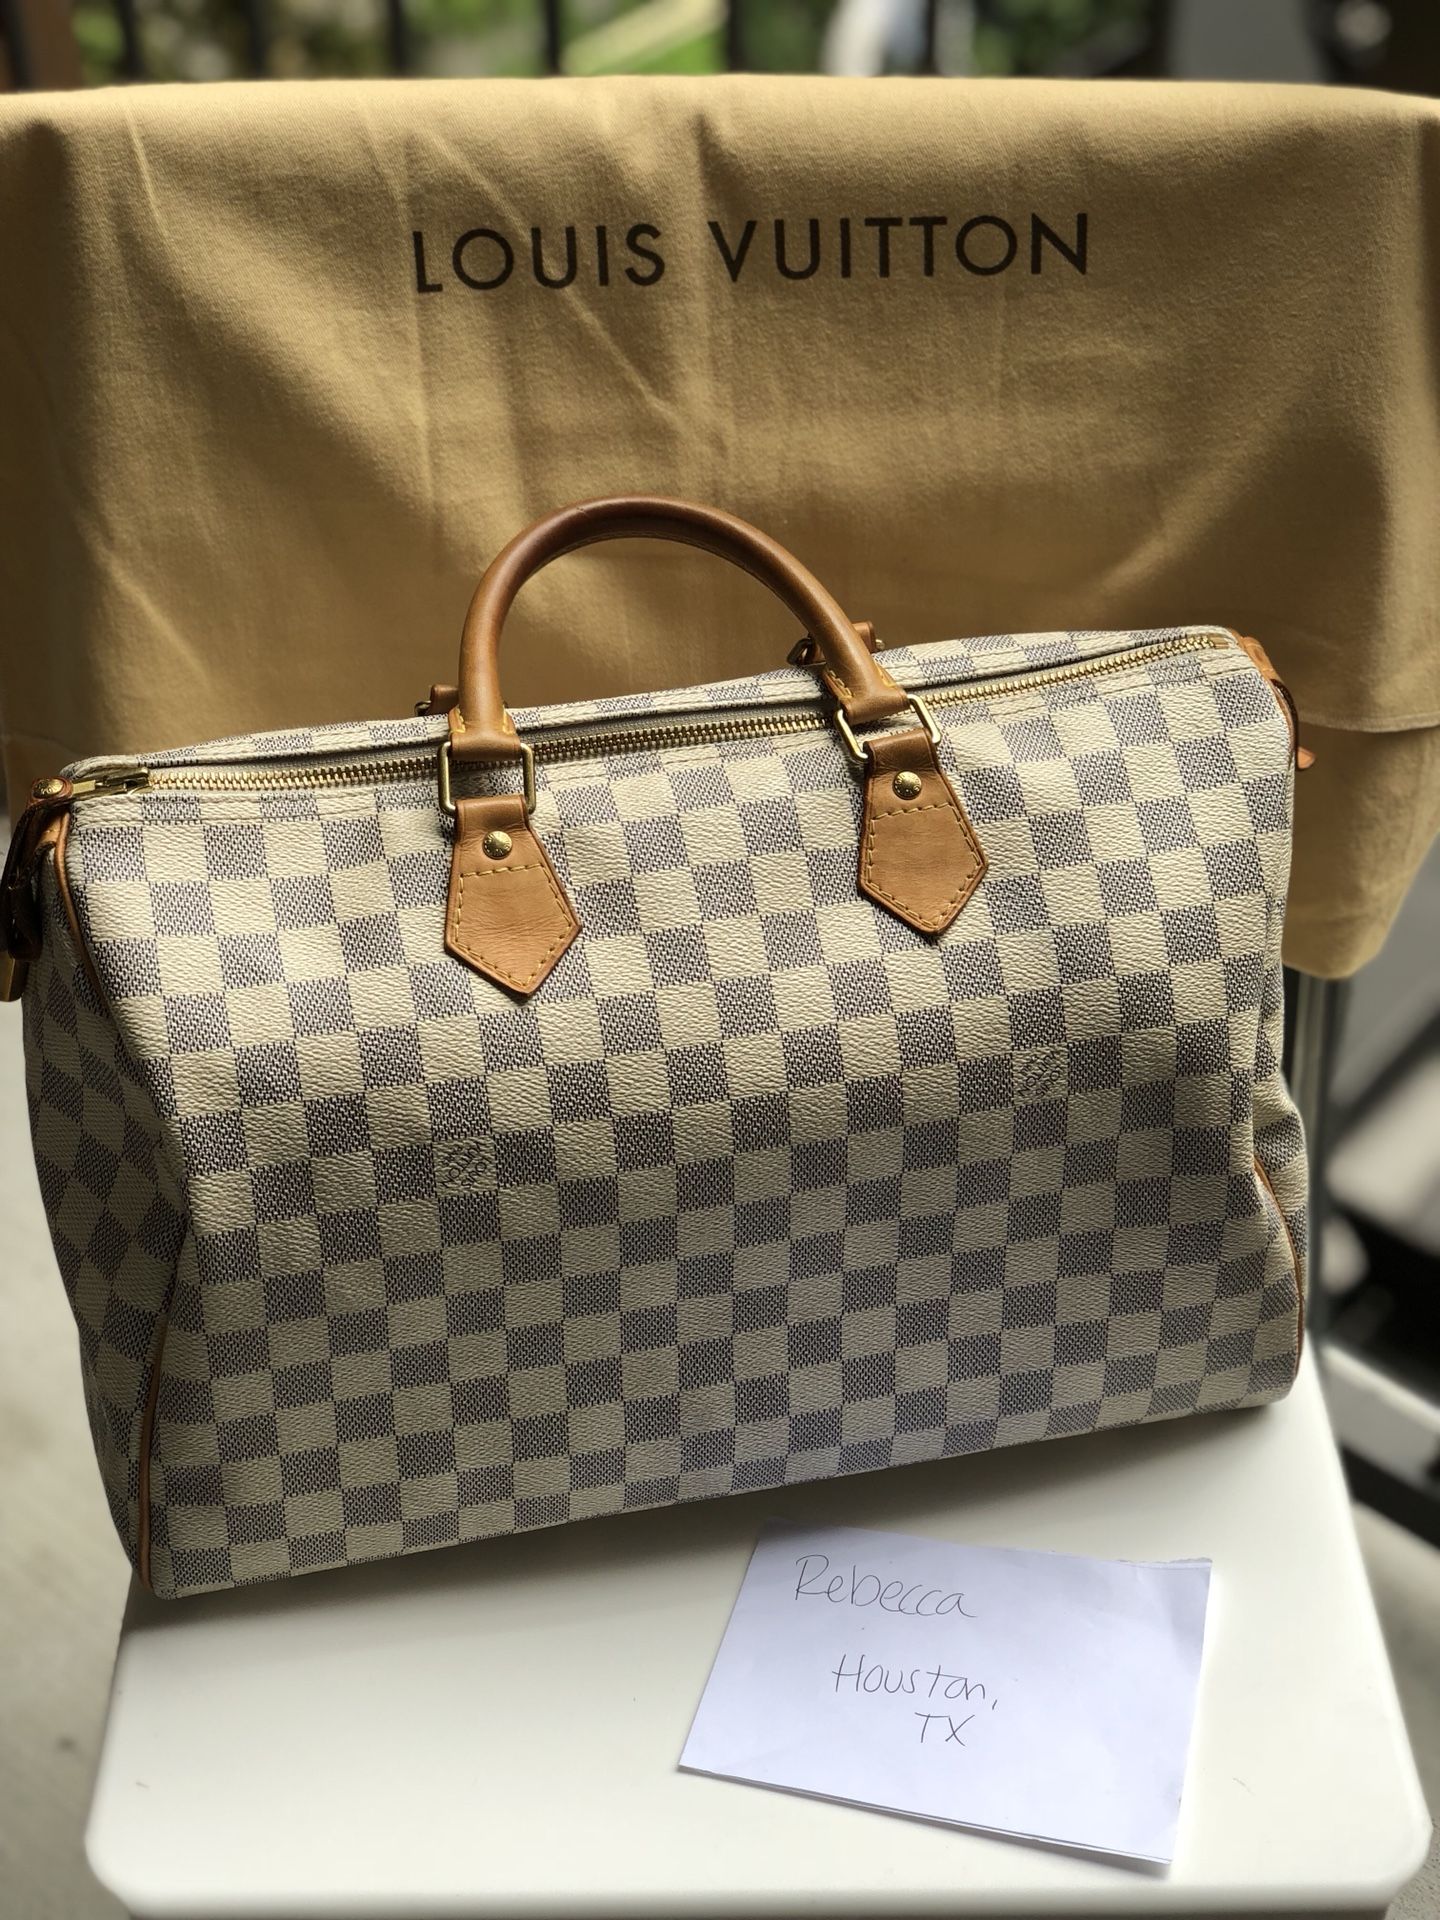 Bag Organizer for Louis Vuitton Speedy 35 